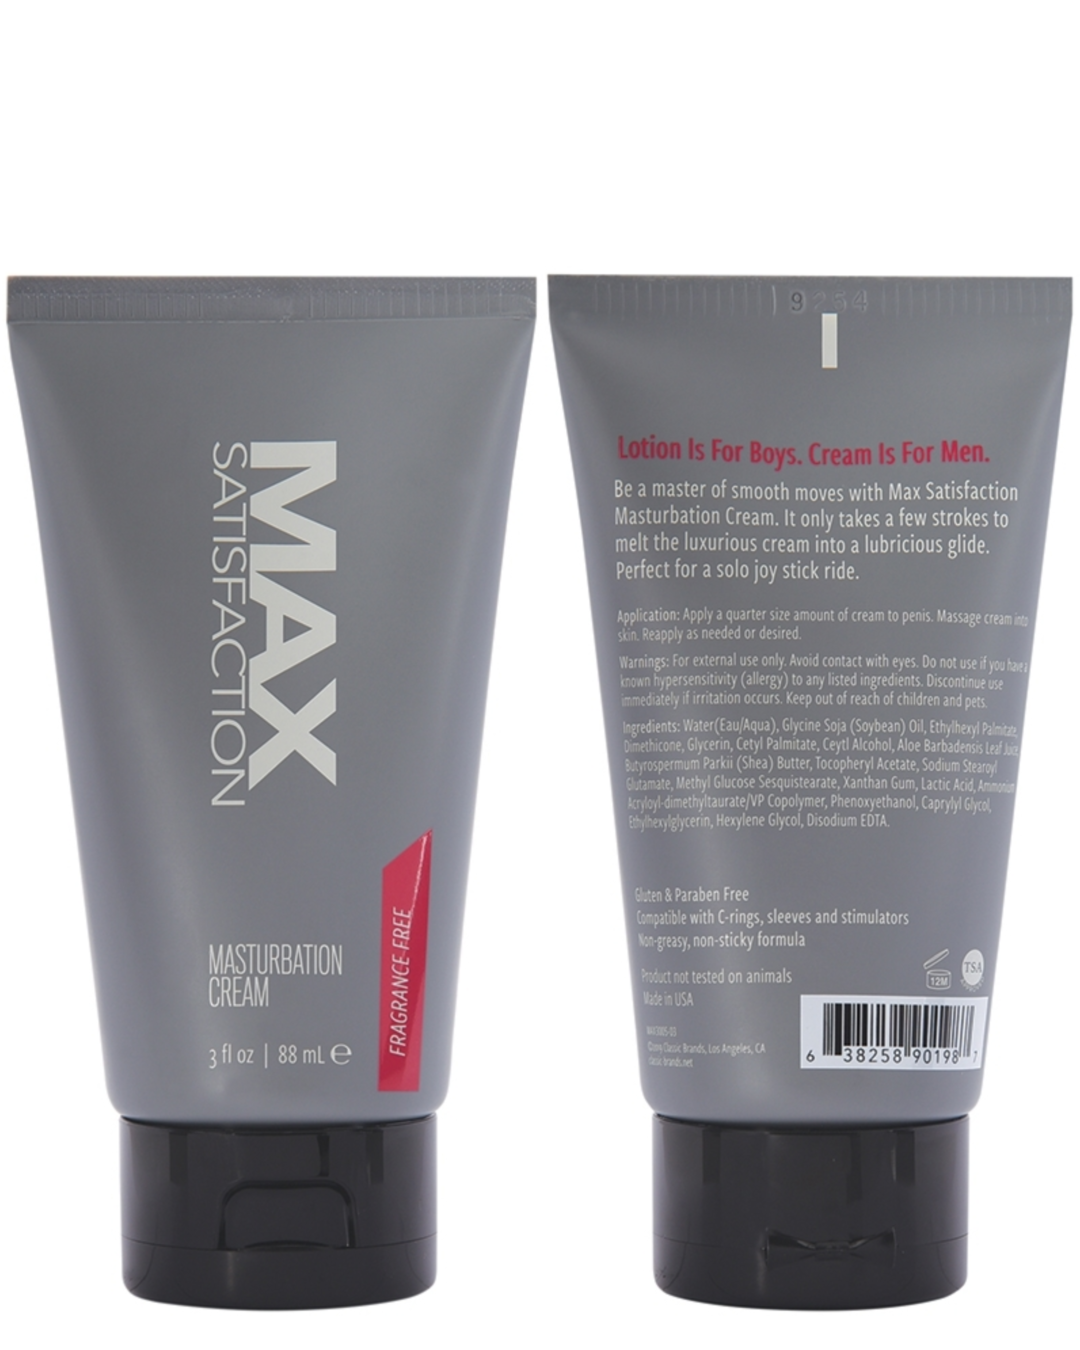 Max Satisfaction Masturbation Cream 3 oz front and back of tube 